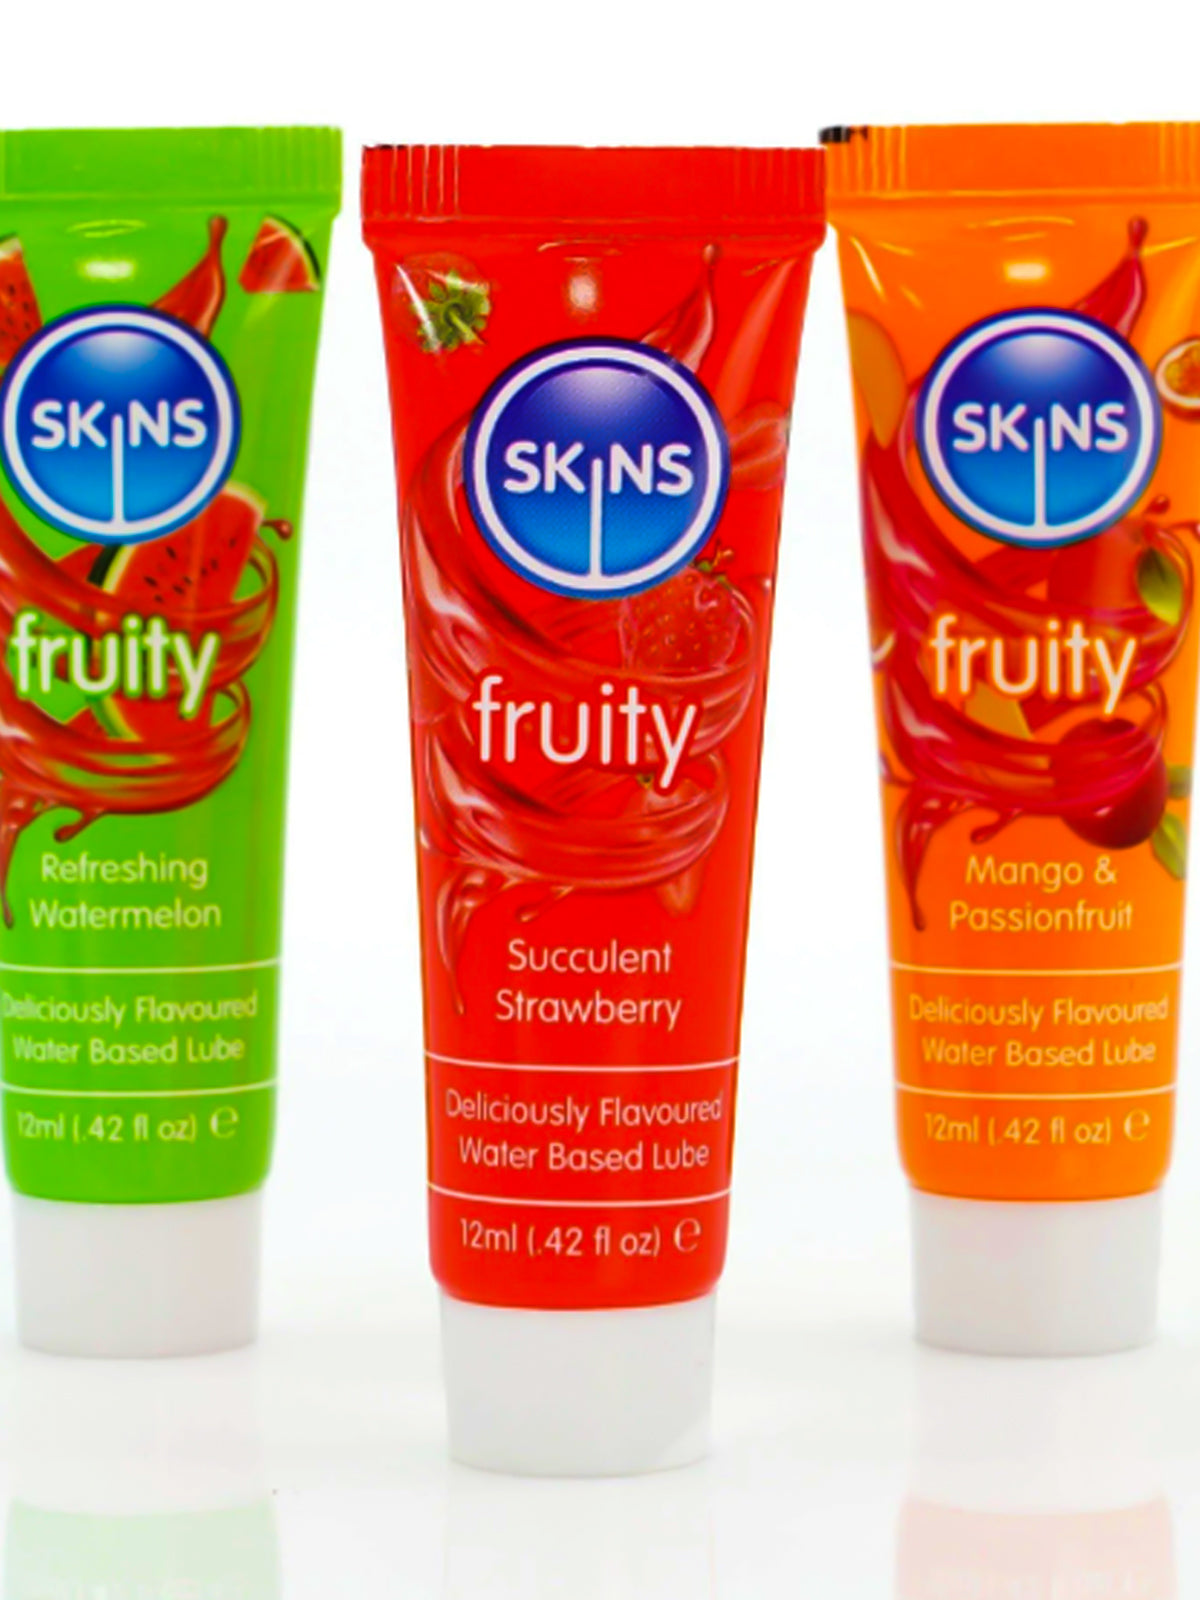 Skins (UK) 3 in 1 Fruity Pack